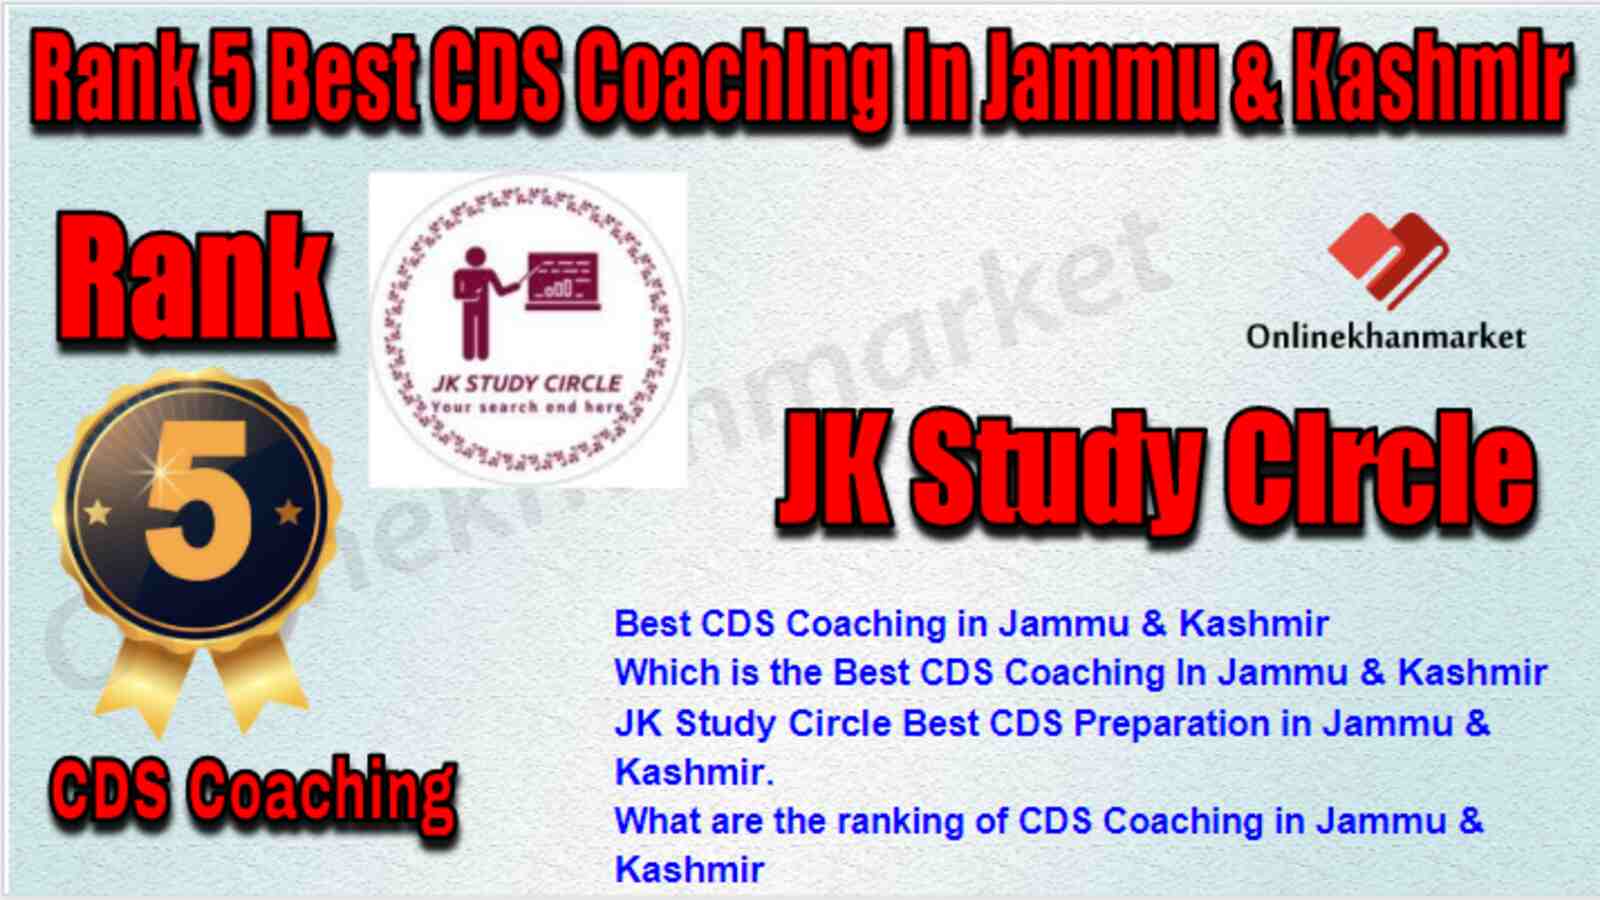 Rank 5 Best CDS Coaching in Jammu & Kashmir